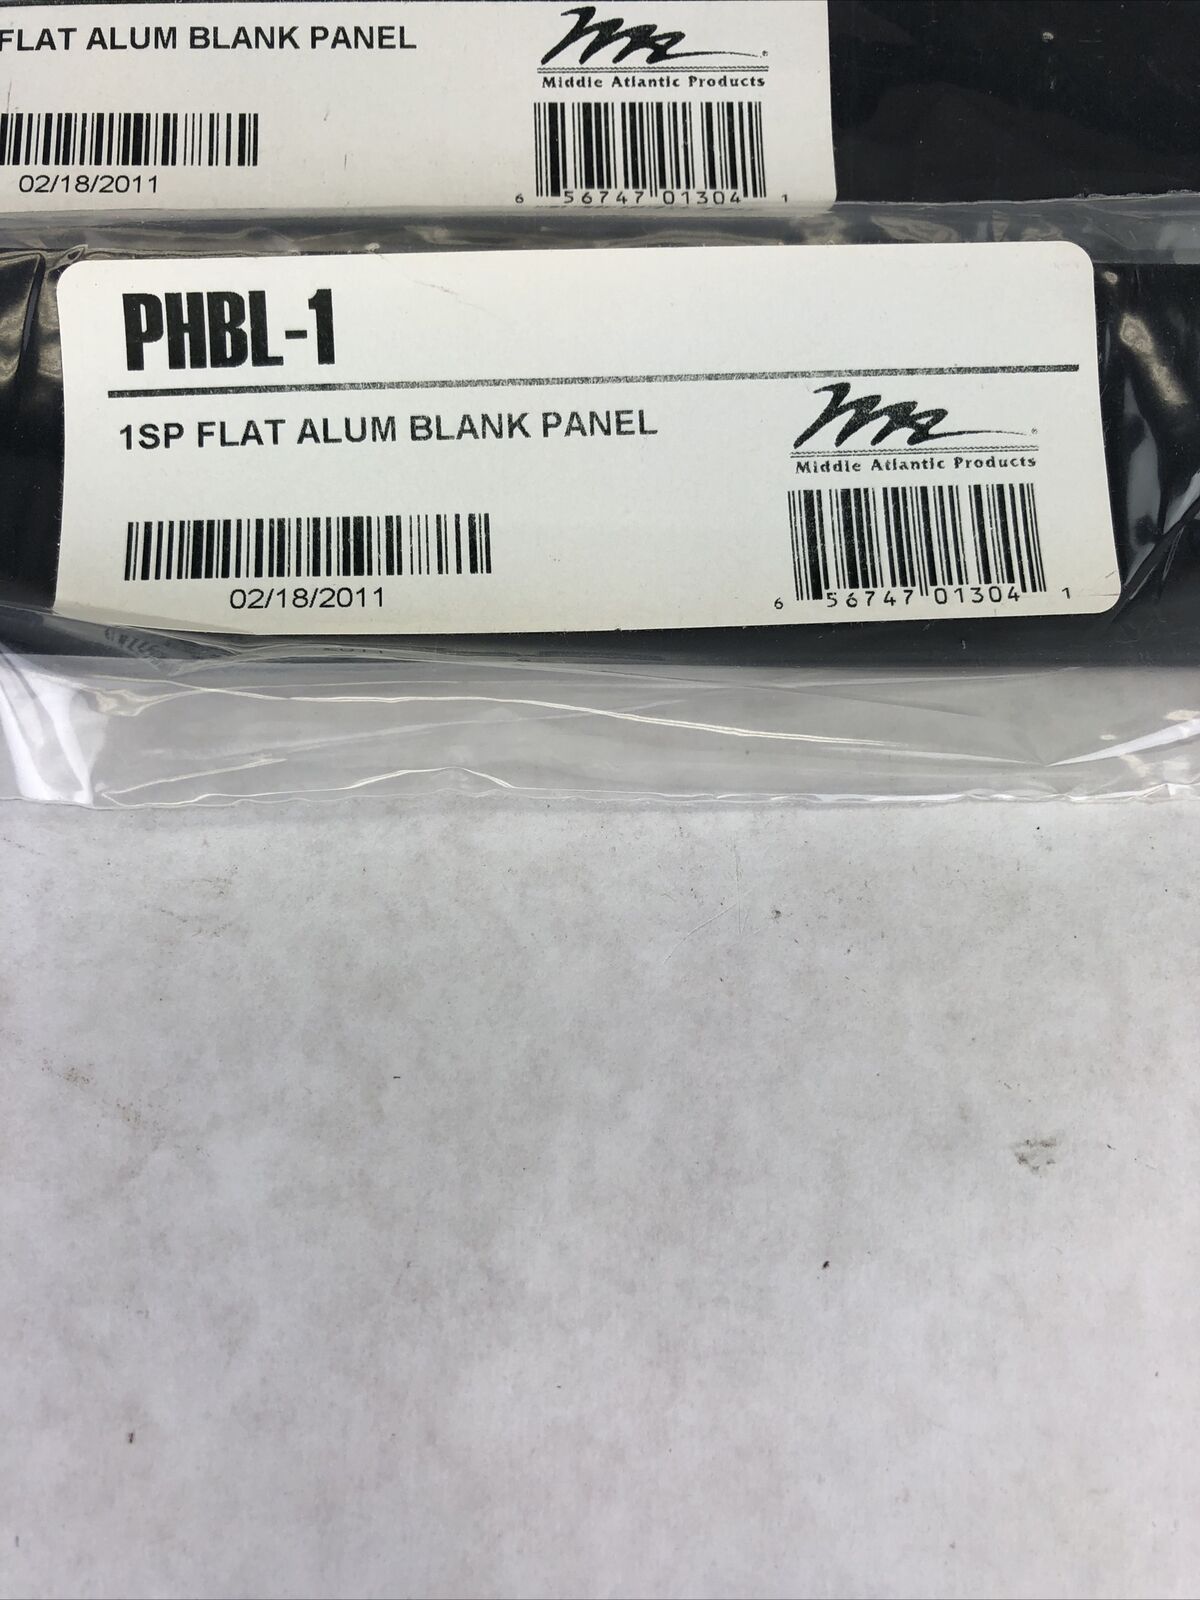 Lot of 3 Middle Atlantic Products PHBL-1 1SPFlat Alum Blank Panels